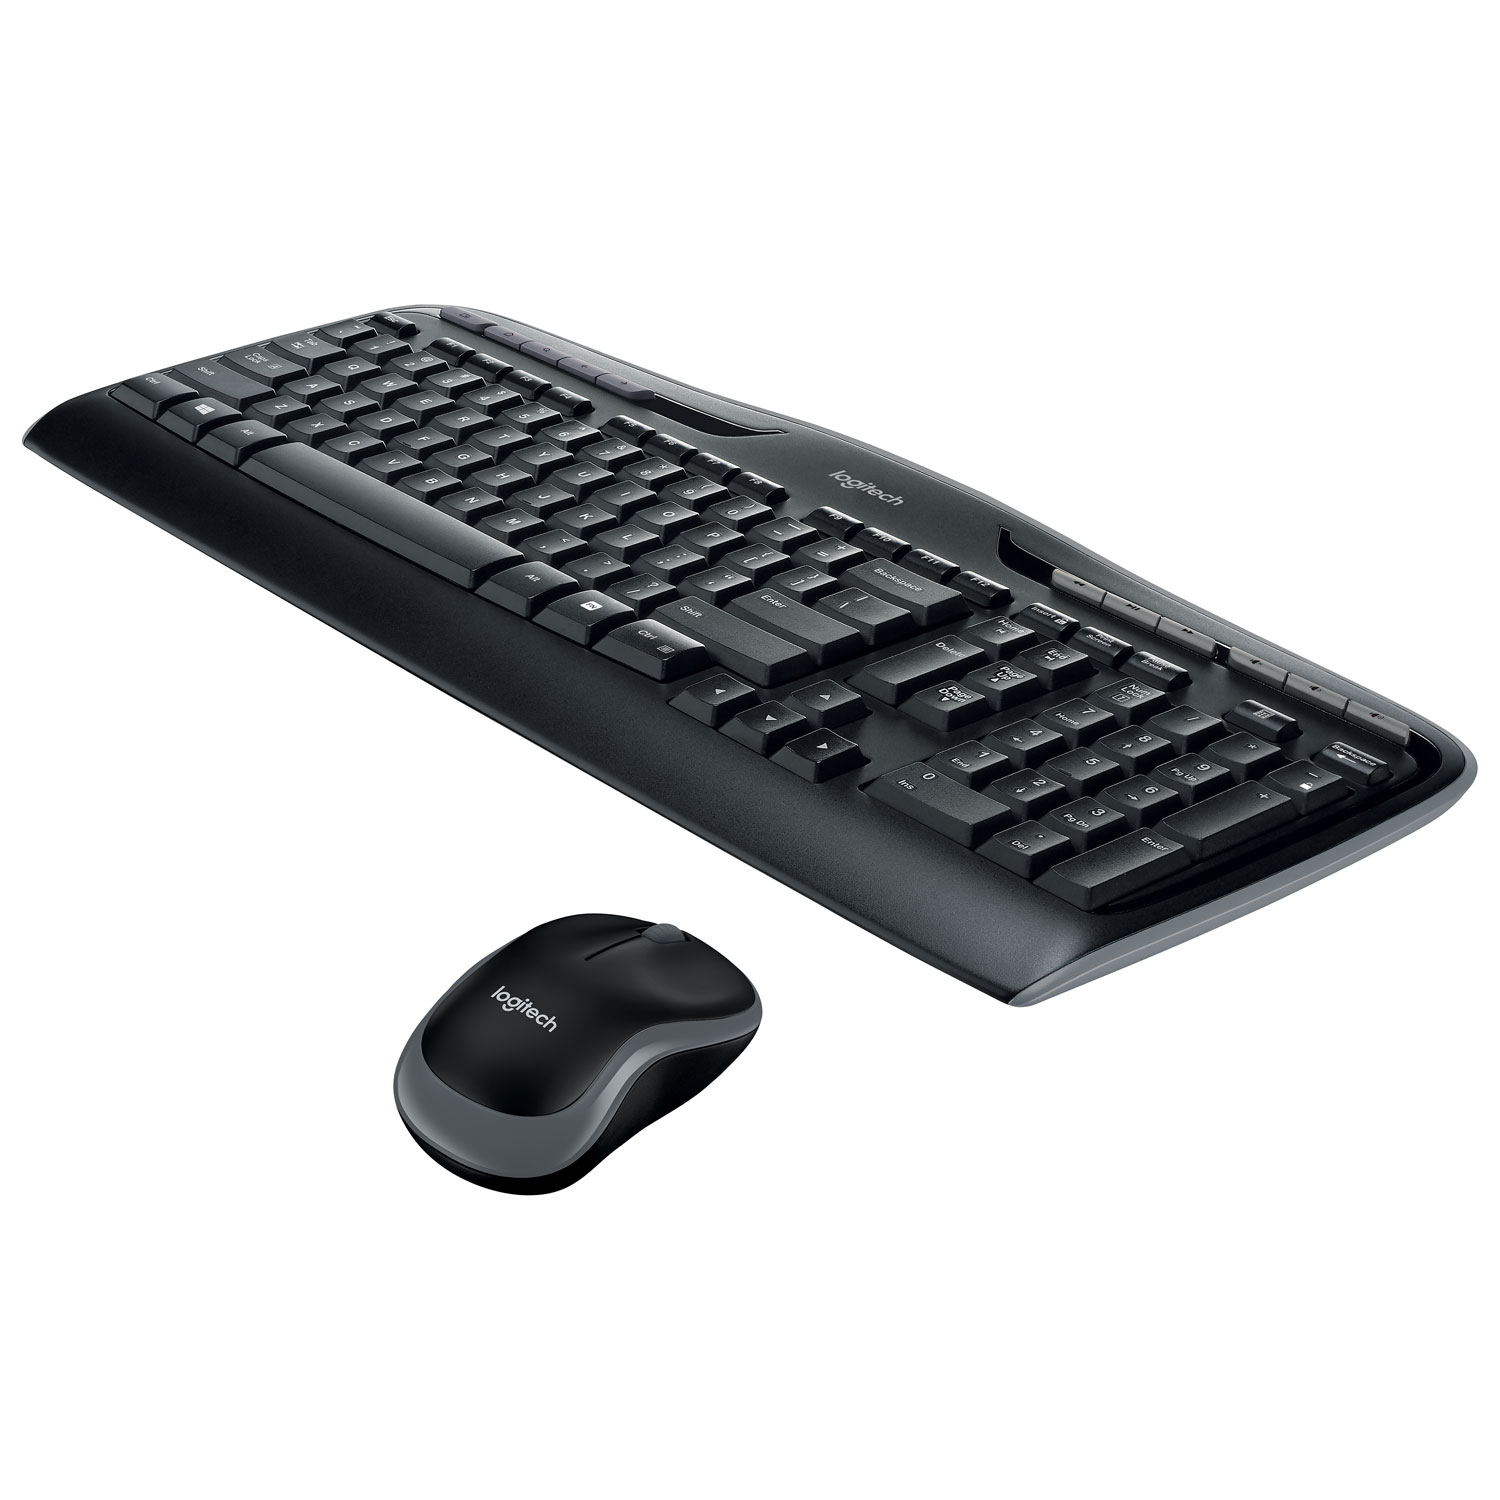 Logitech MK320 Full-size Wireless Membrane Keyboard and Mouse Bundle Black  920-002836 - Best Buy